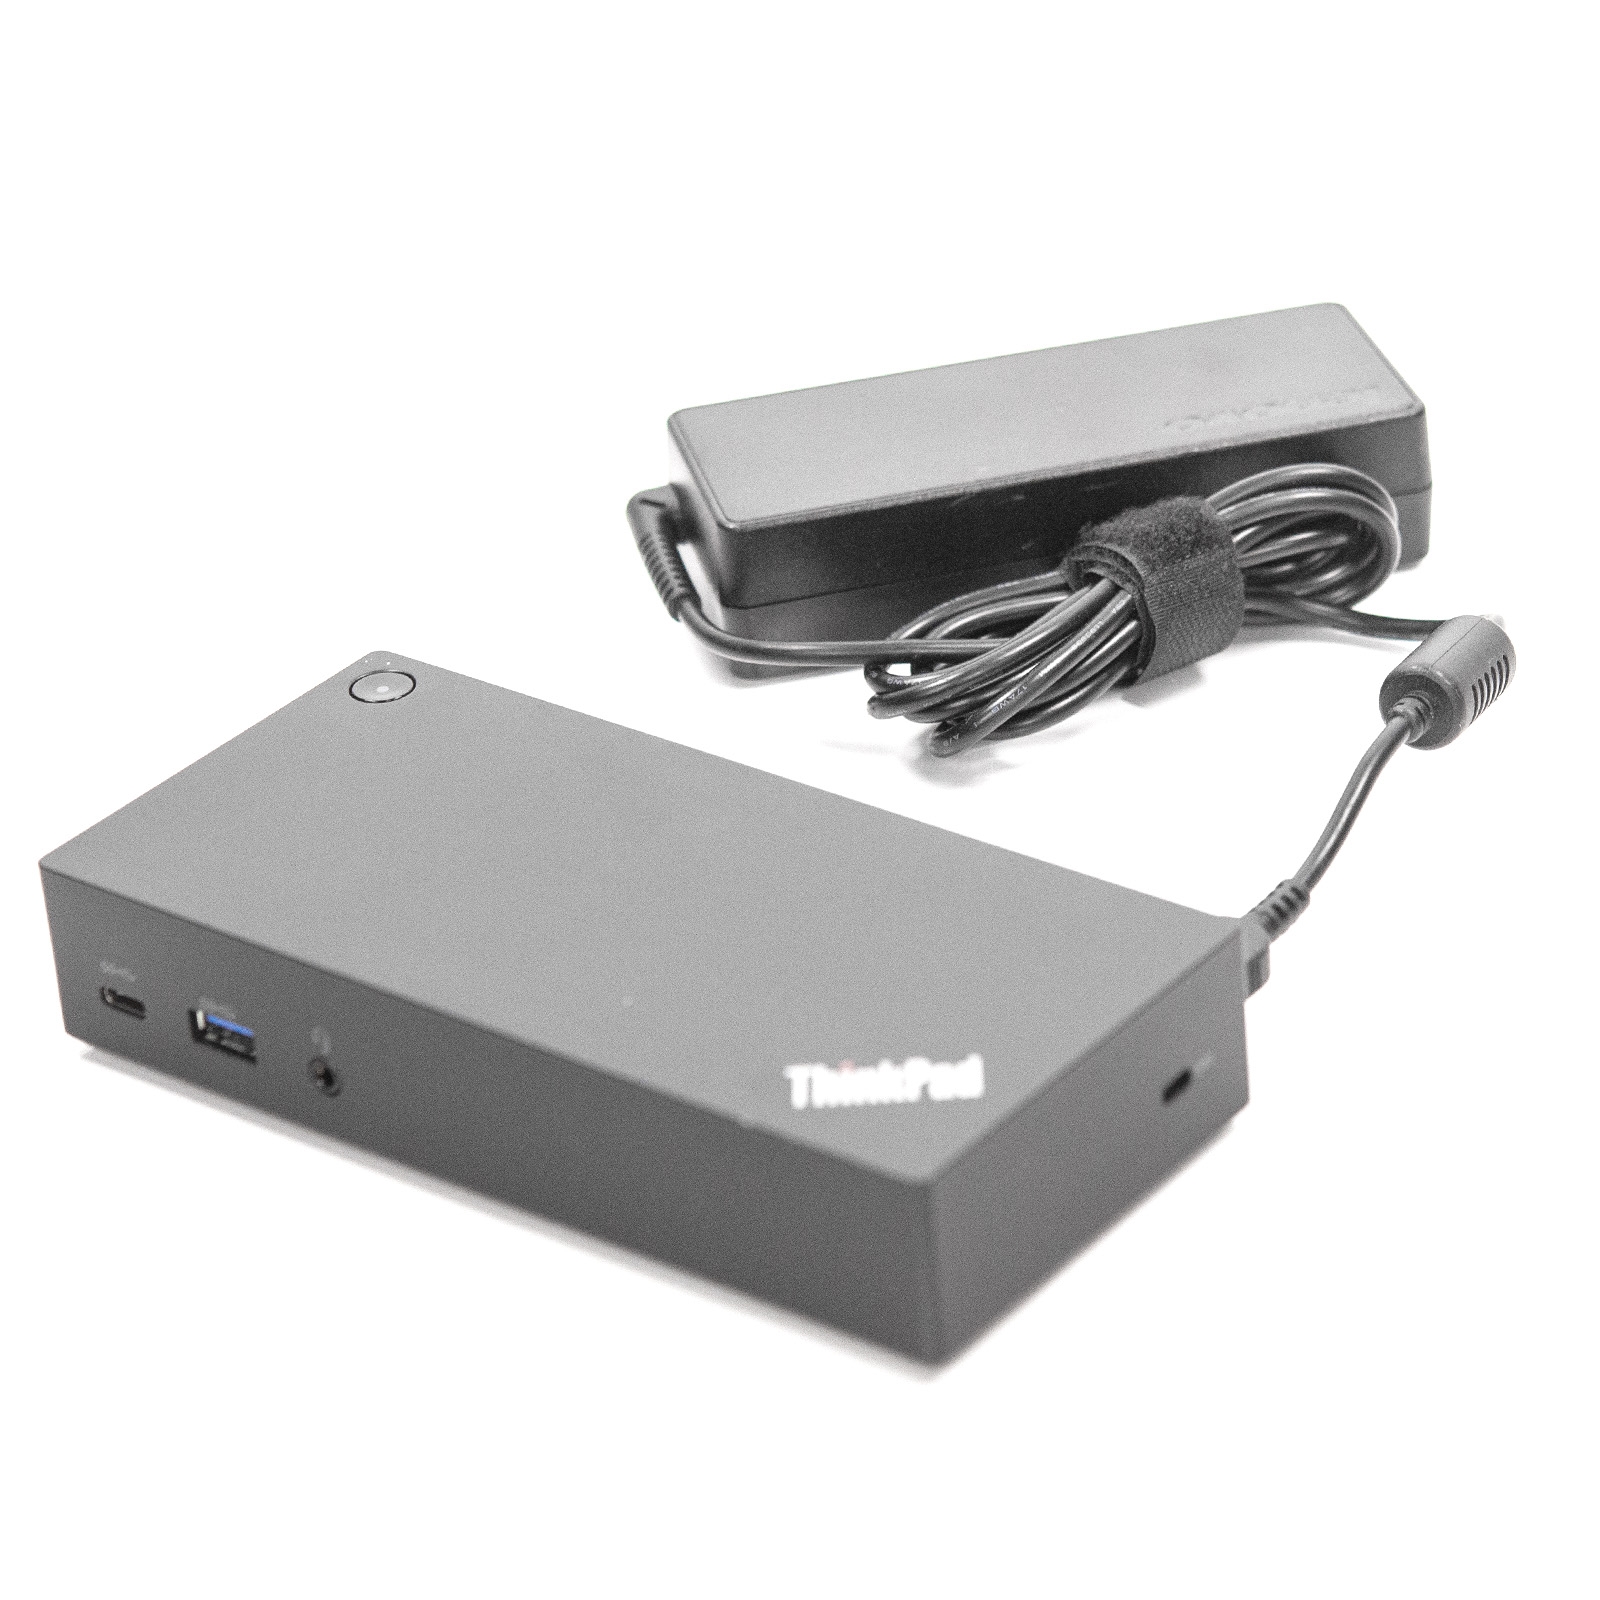 Restored Lenovo ThinkPad USB-C Dock 40A9 DK1633 Laptop Docking Station 40A90090US SD20L36276 03X7194 w/ USB-C Cable & 90w AC Adapter (Refurbished) - image 2 of 8